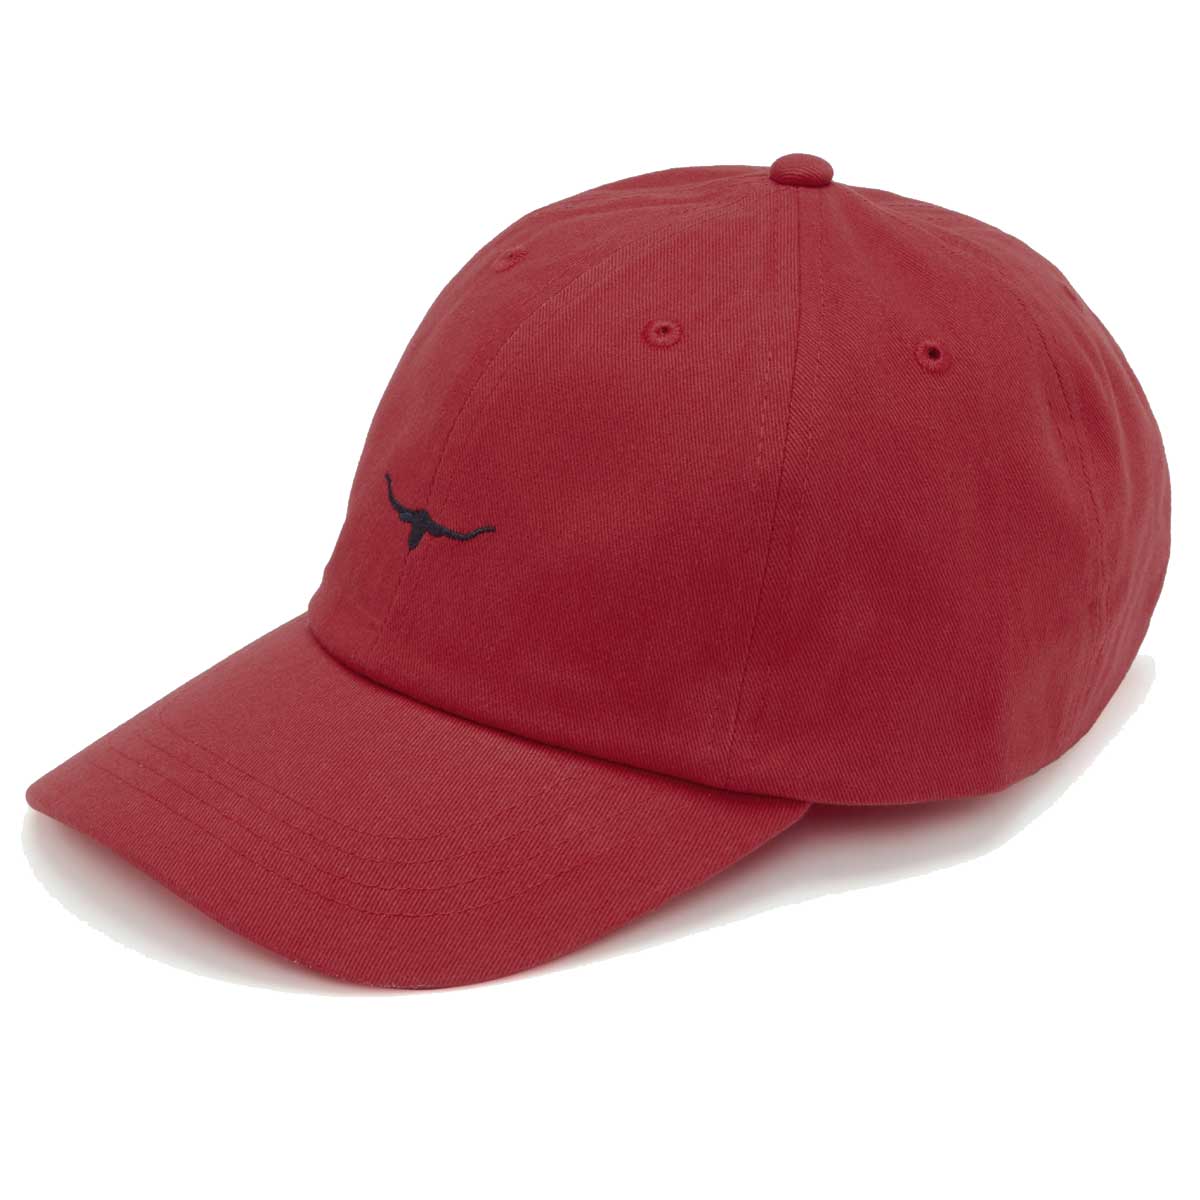 RM WILLIAMS Cap - Longhorn Steers Head Mini Logo - Red